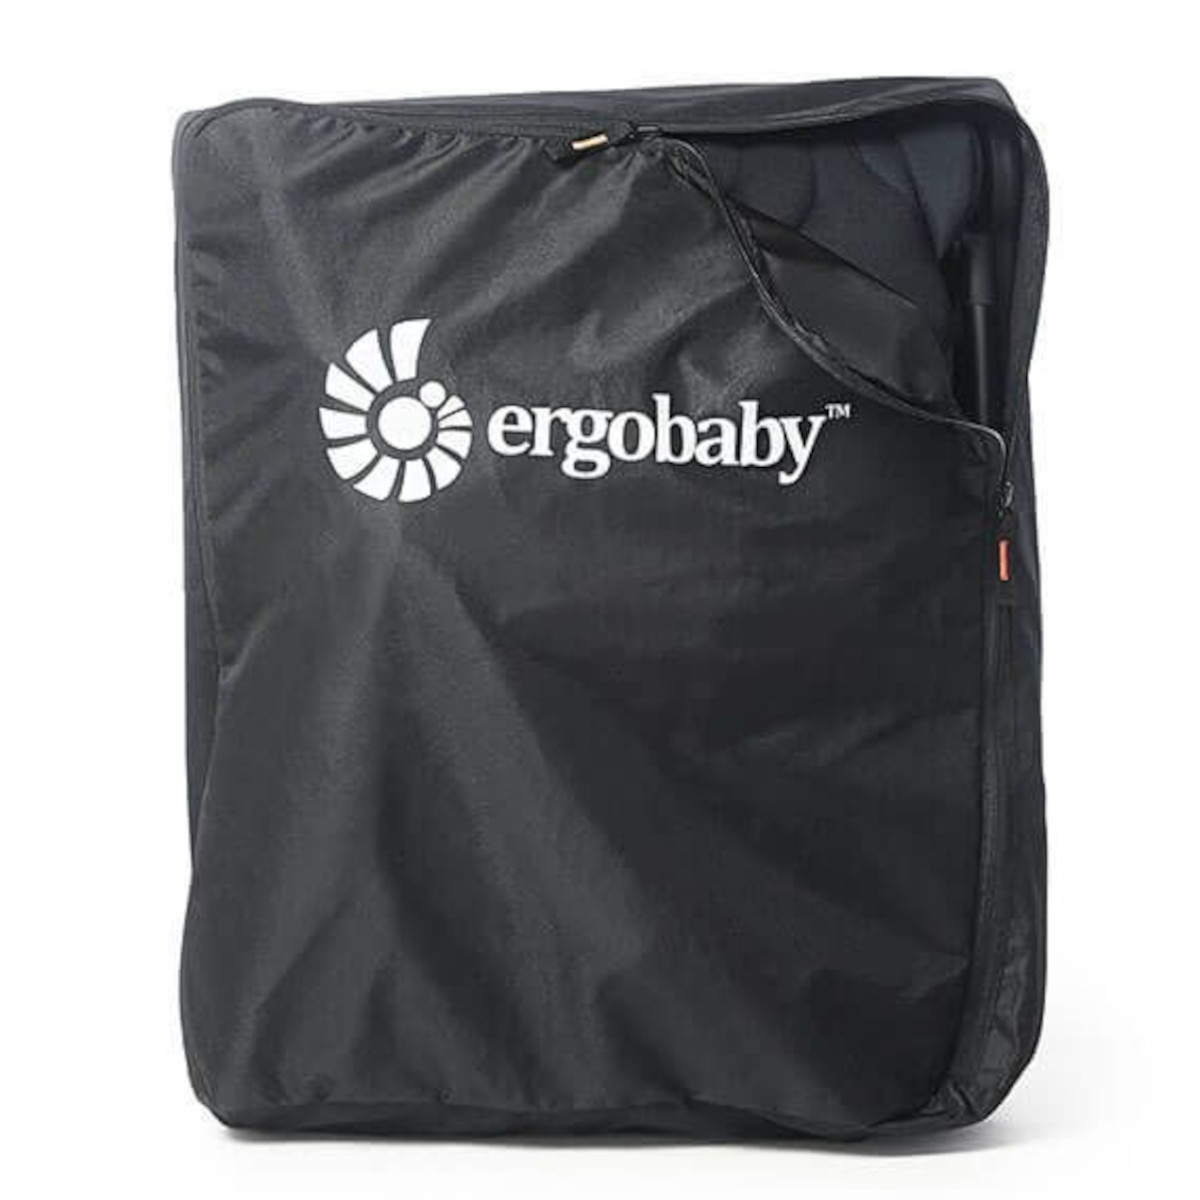 ergobaby travel backpack